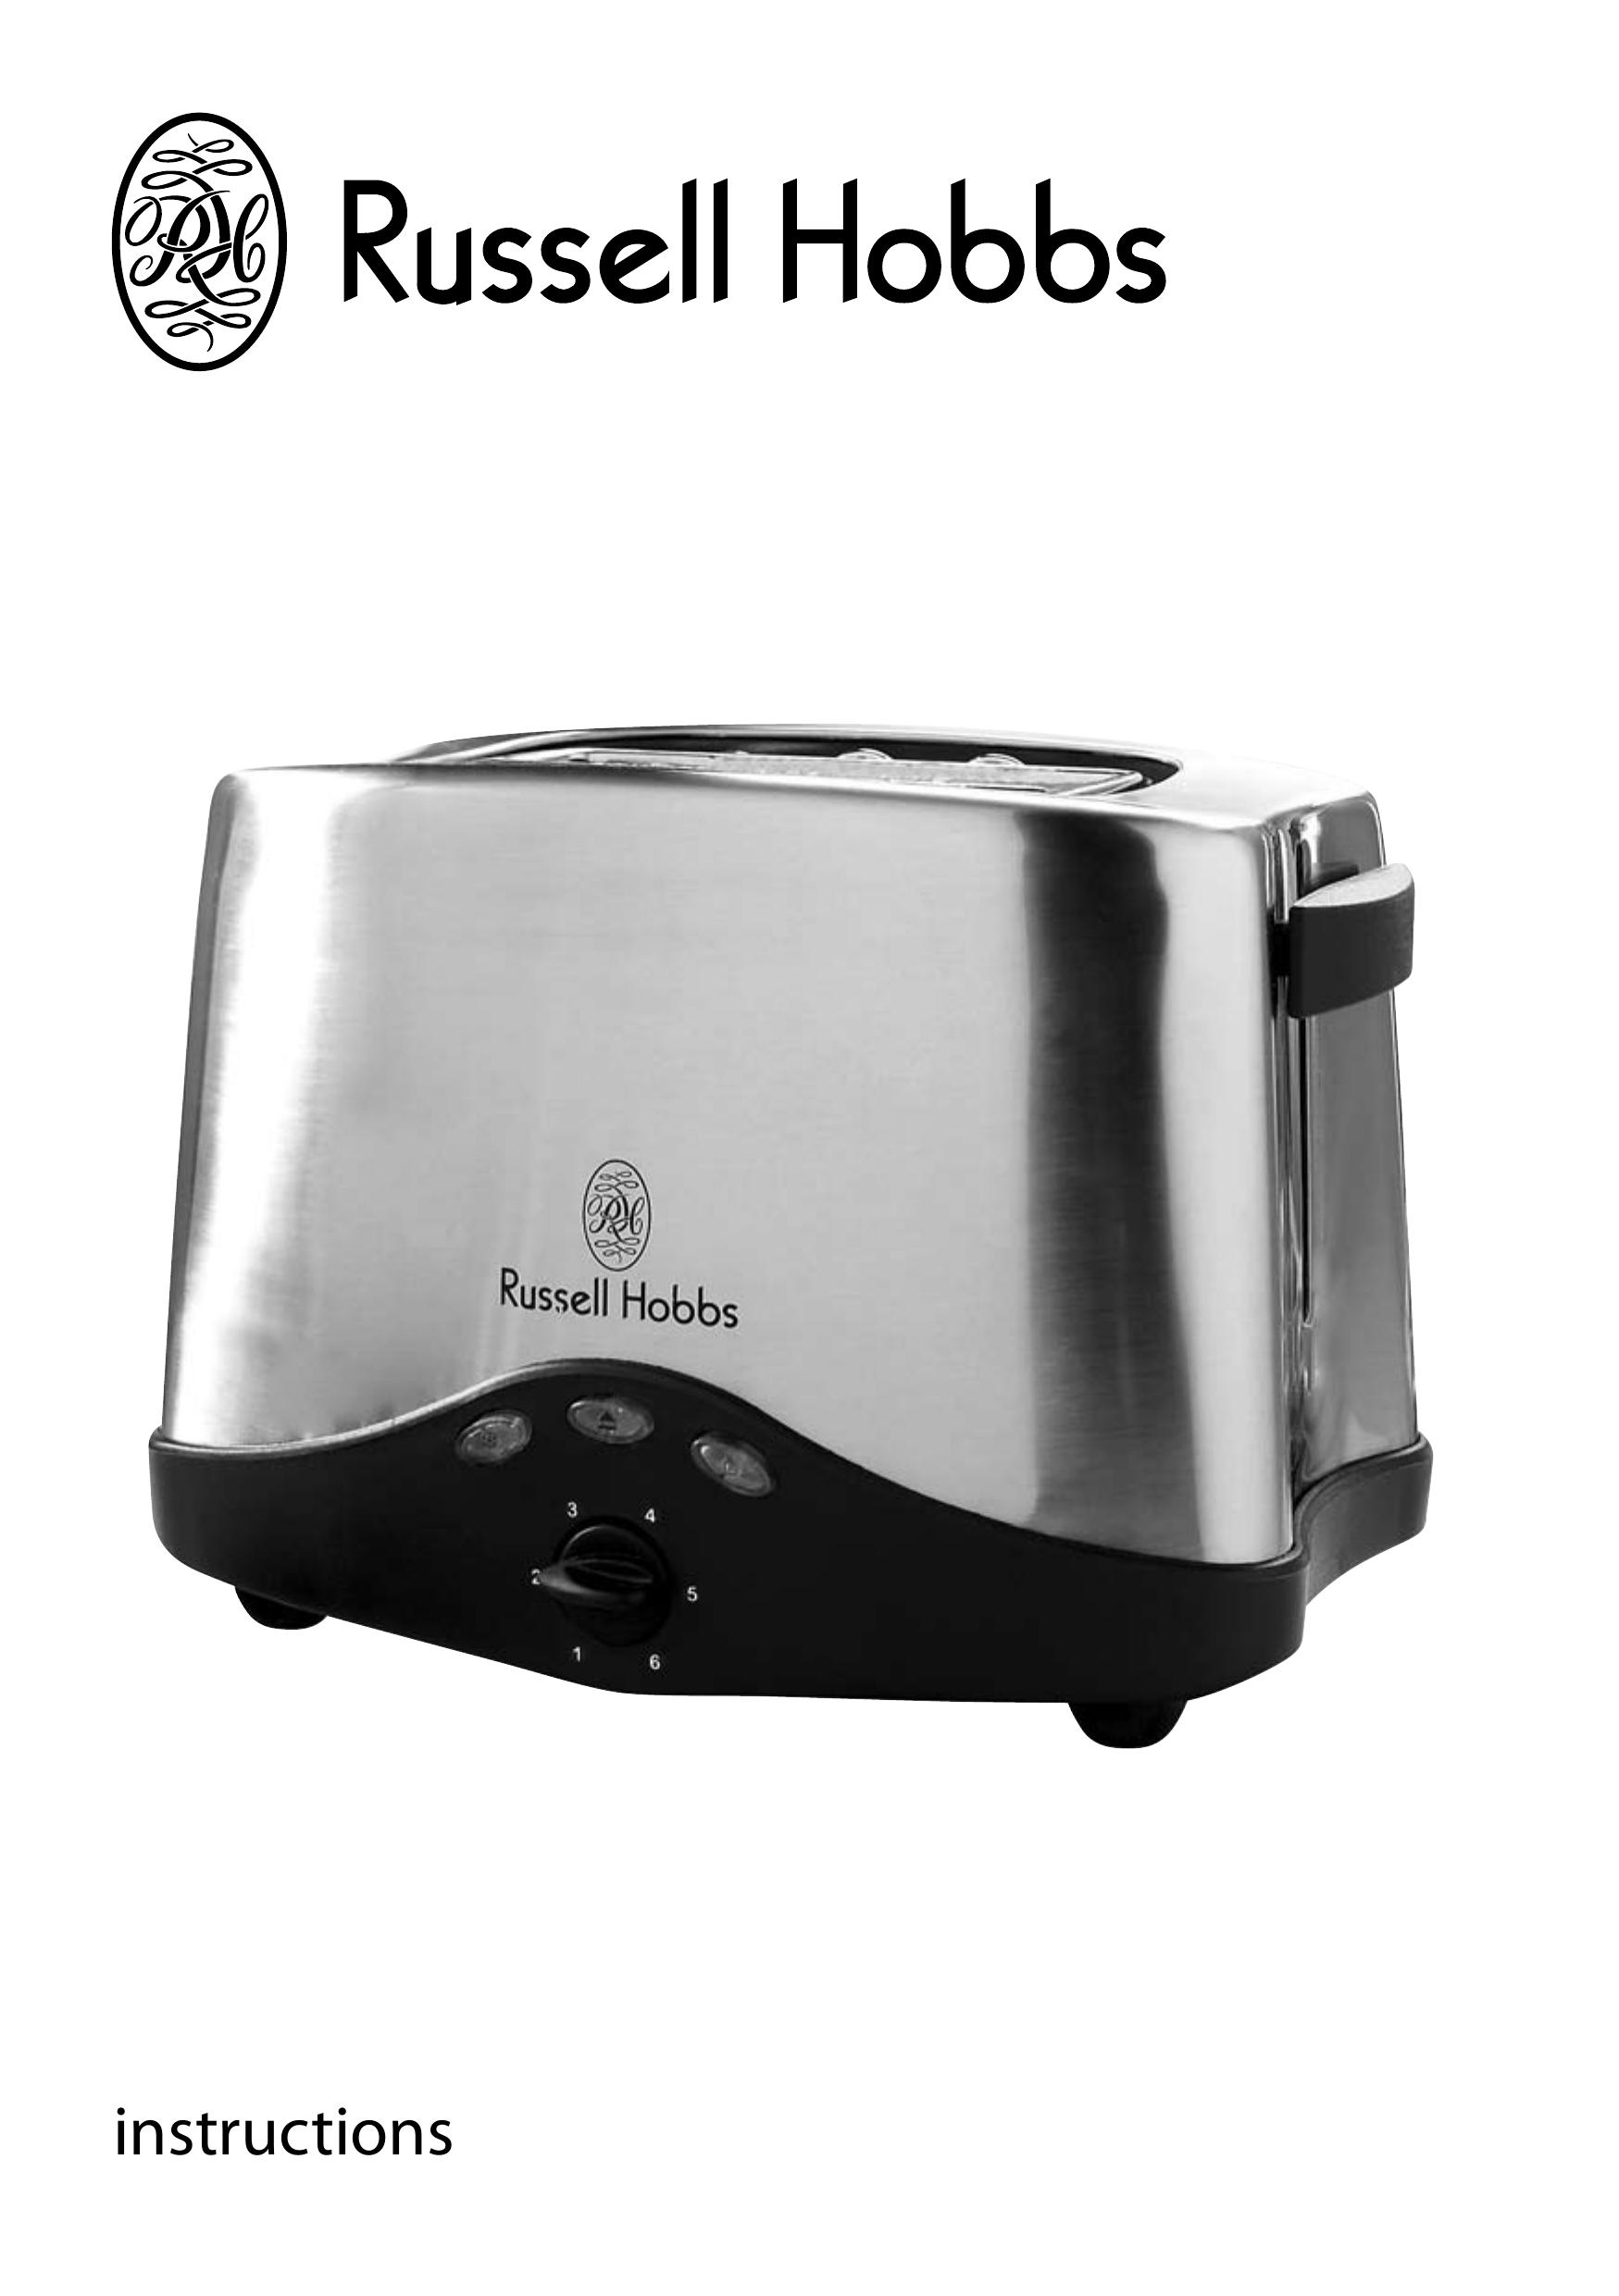 Russell Hobbs LA5061620 Toaster User Manual